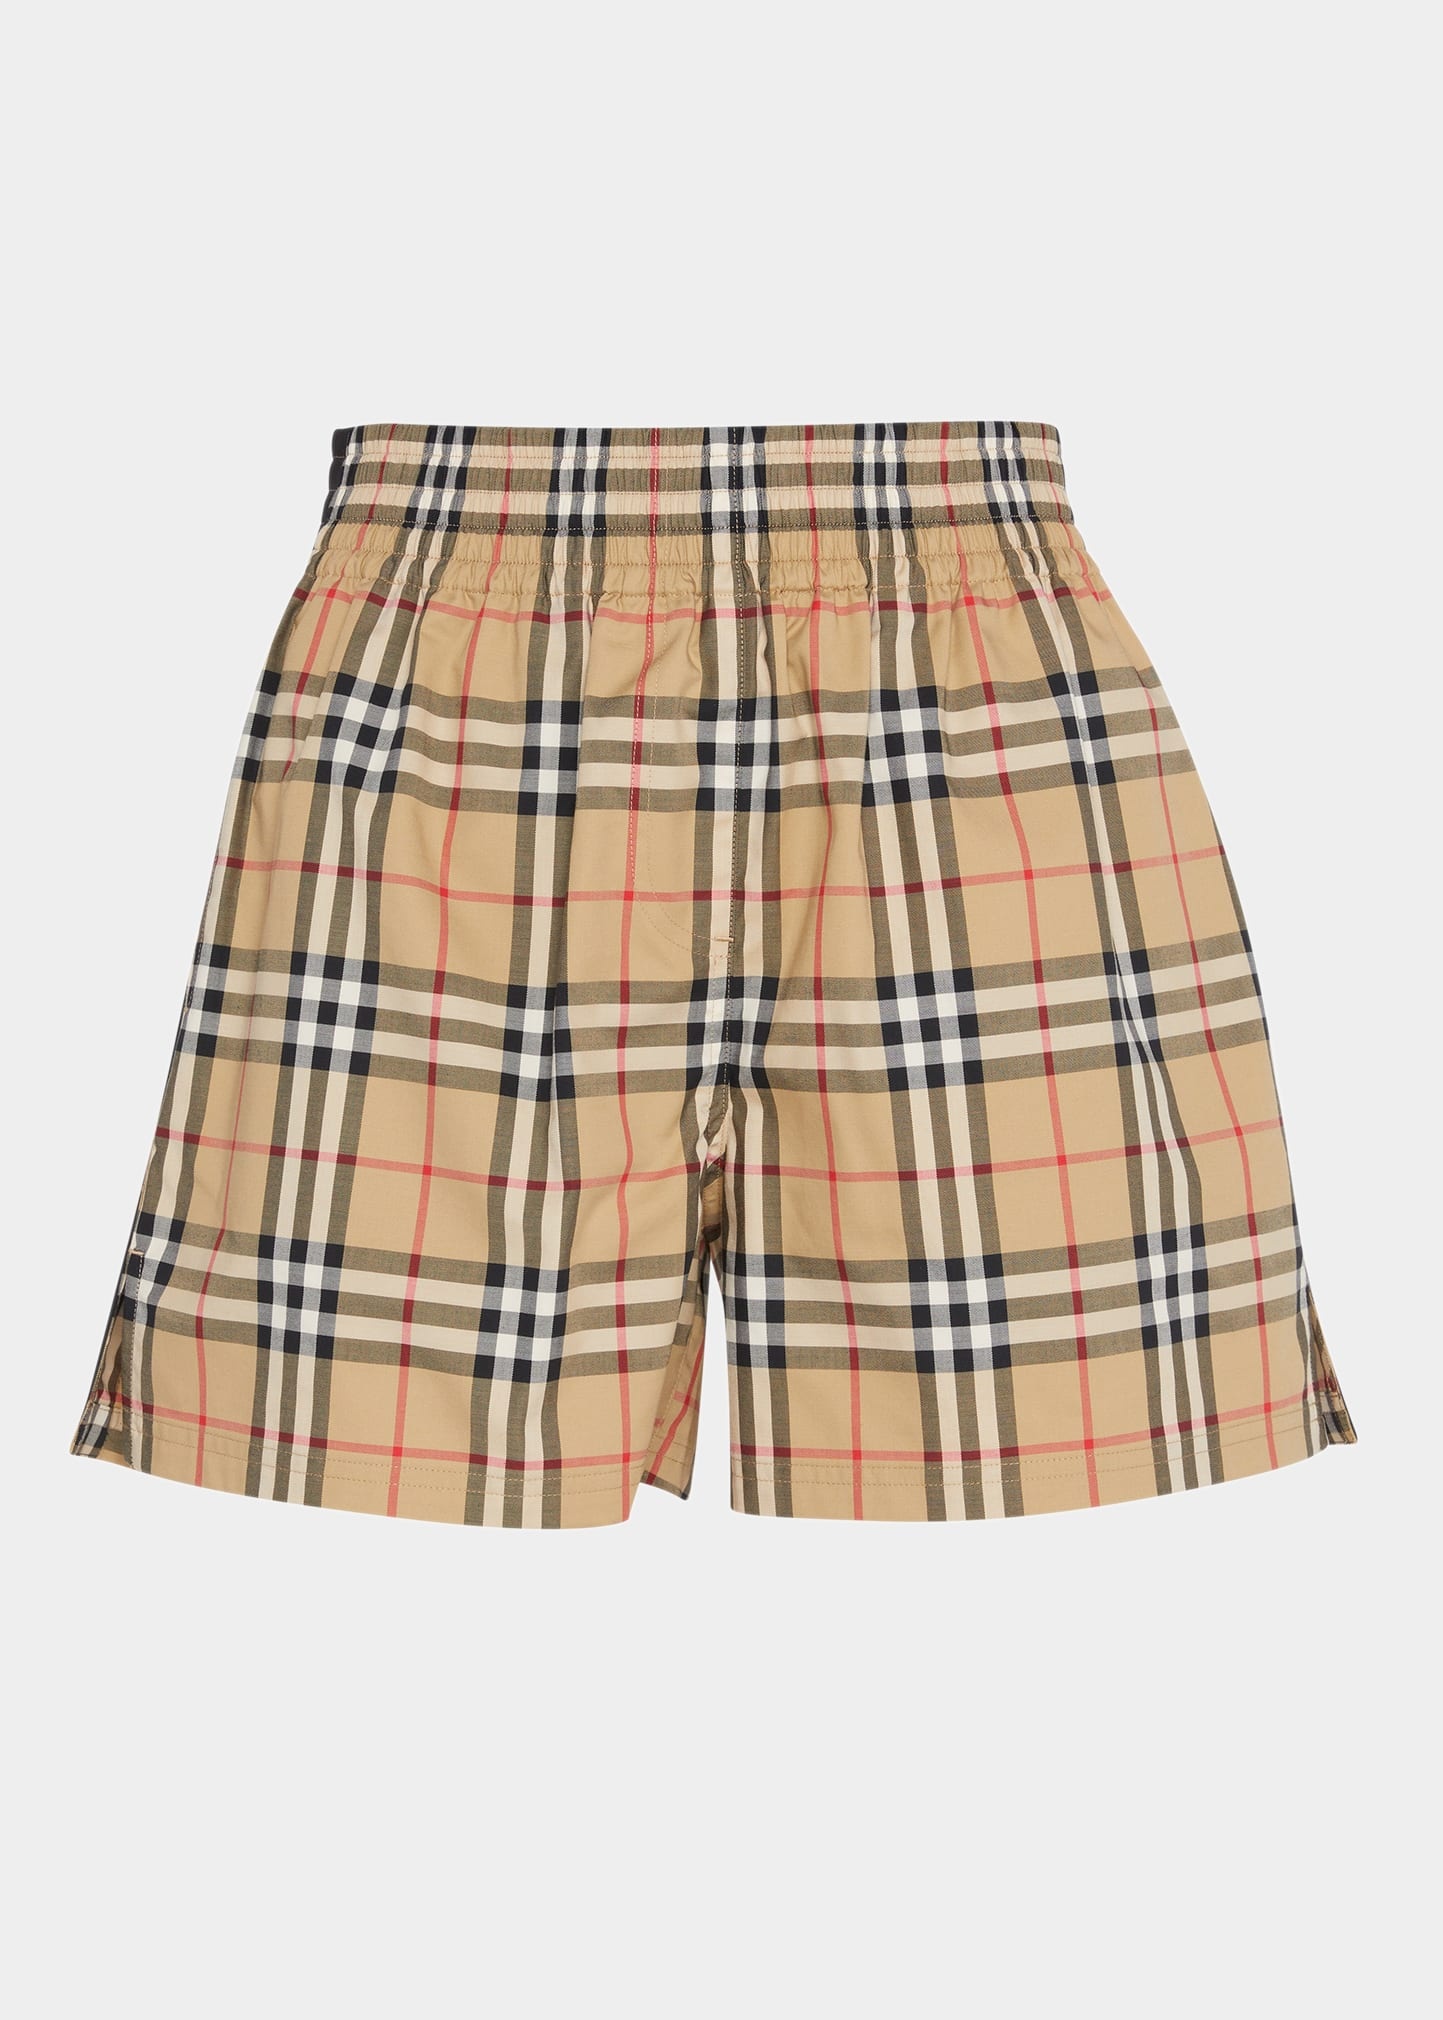 Audrey Side-Stripes Check Shorts - 1